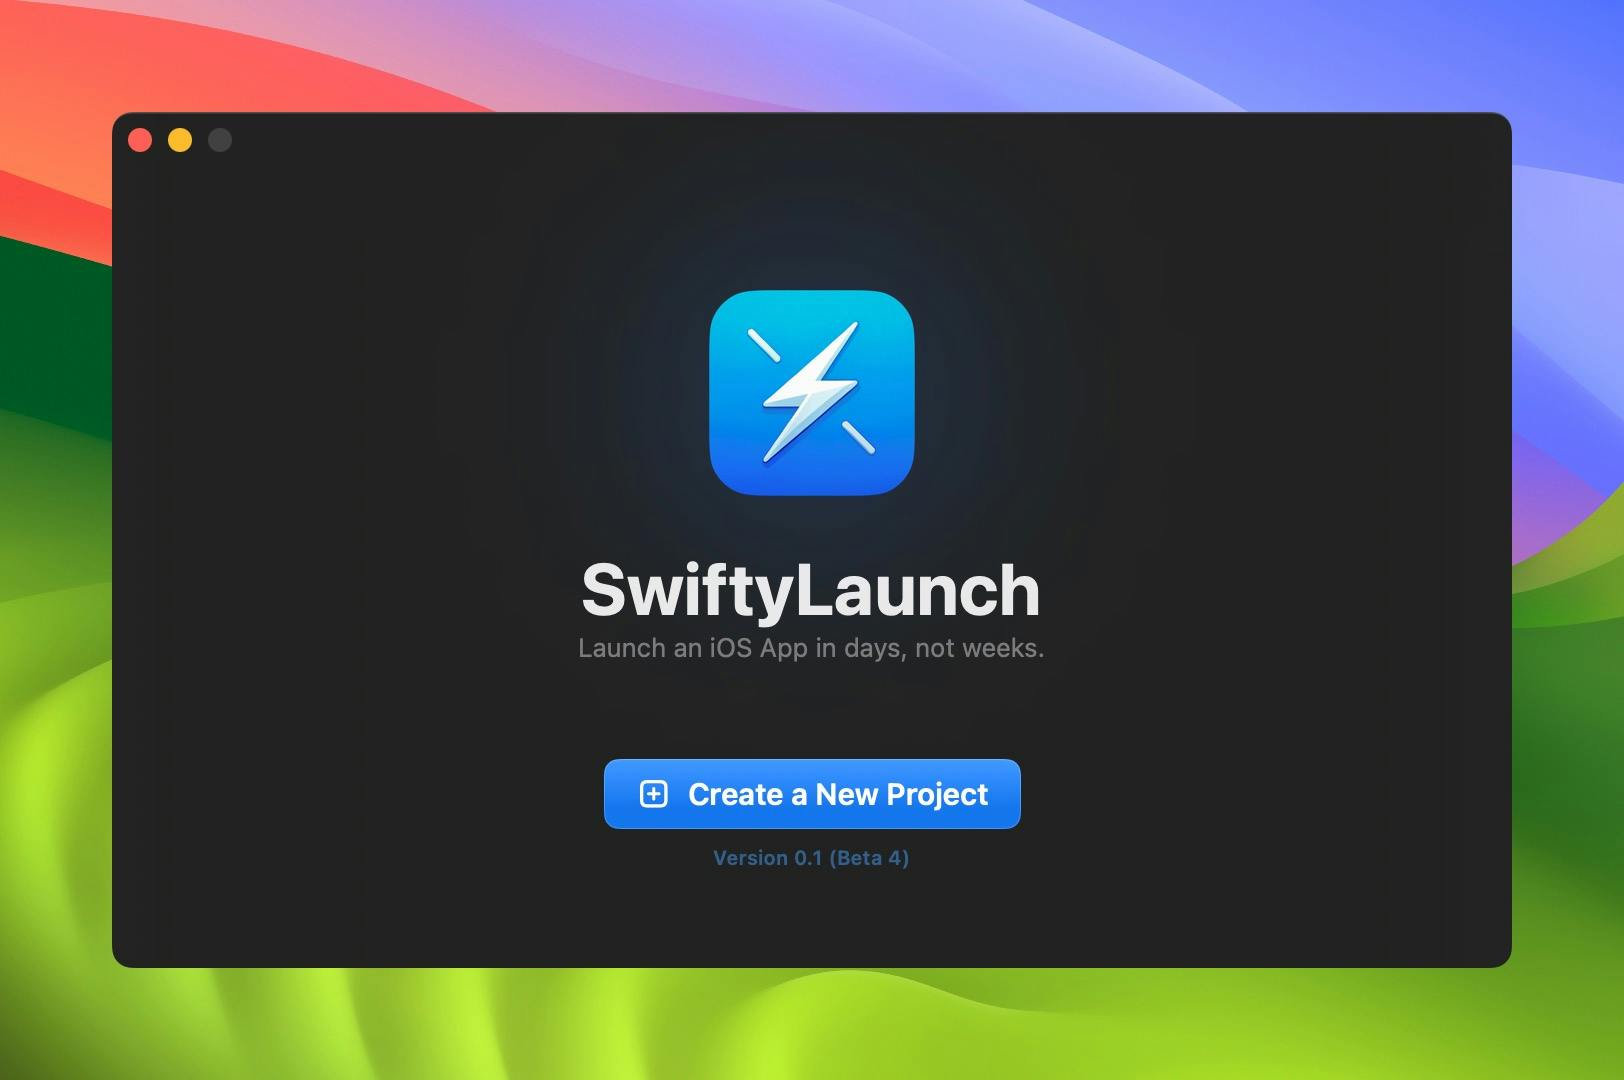 SwiftyLaunch Welcome Screen